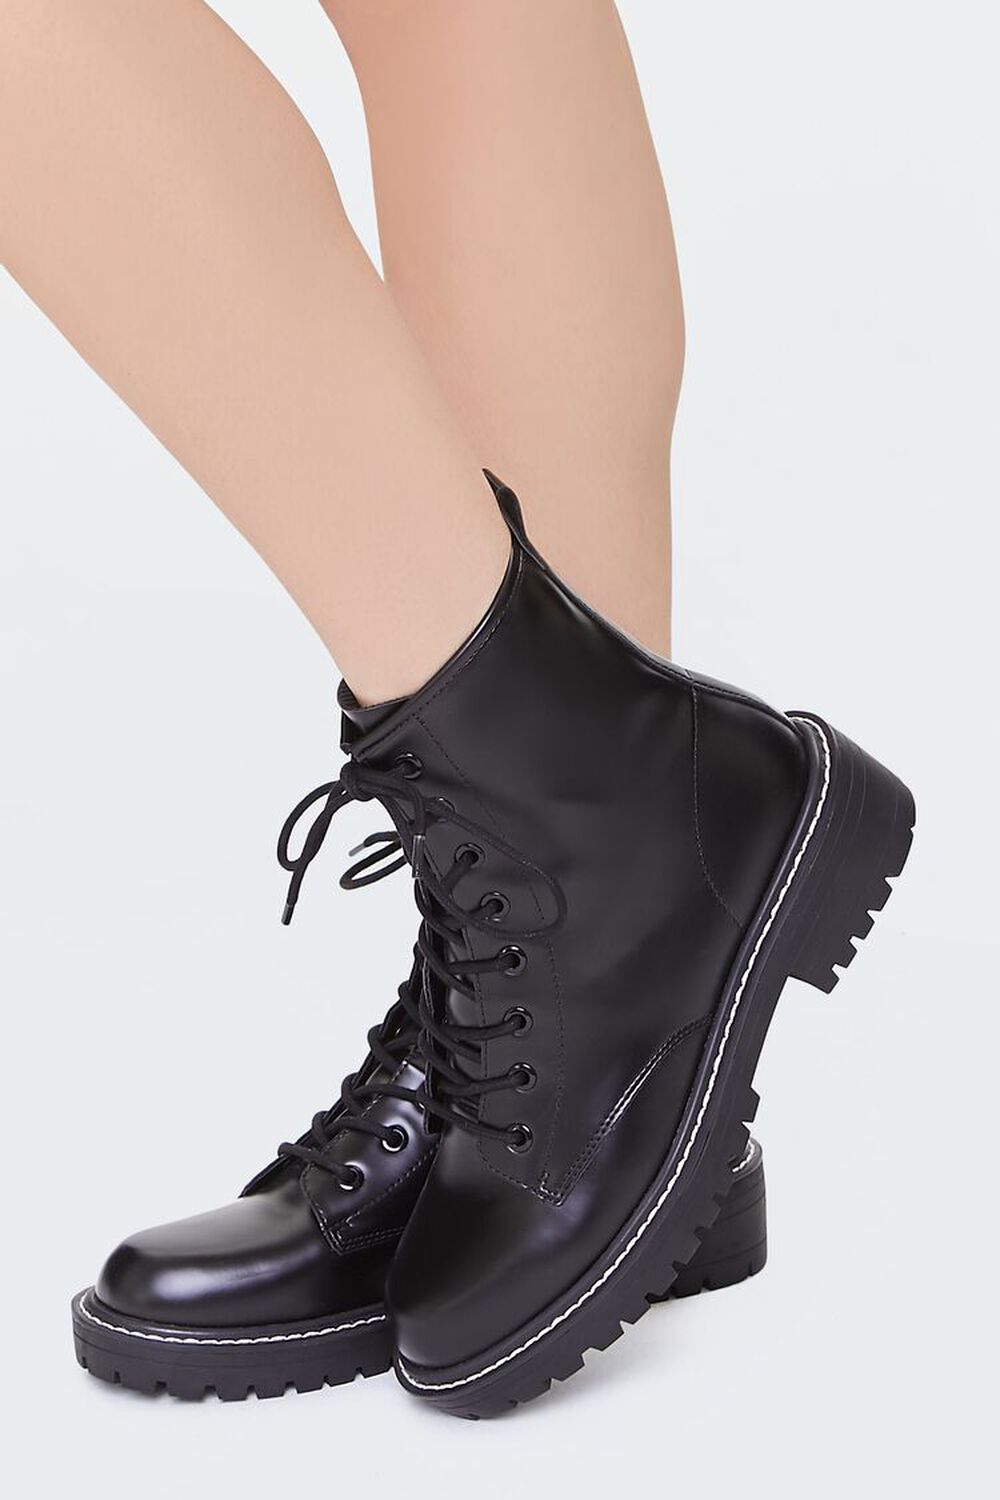 Faux Leather Combat Boots, image 1